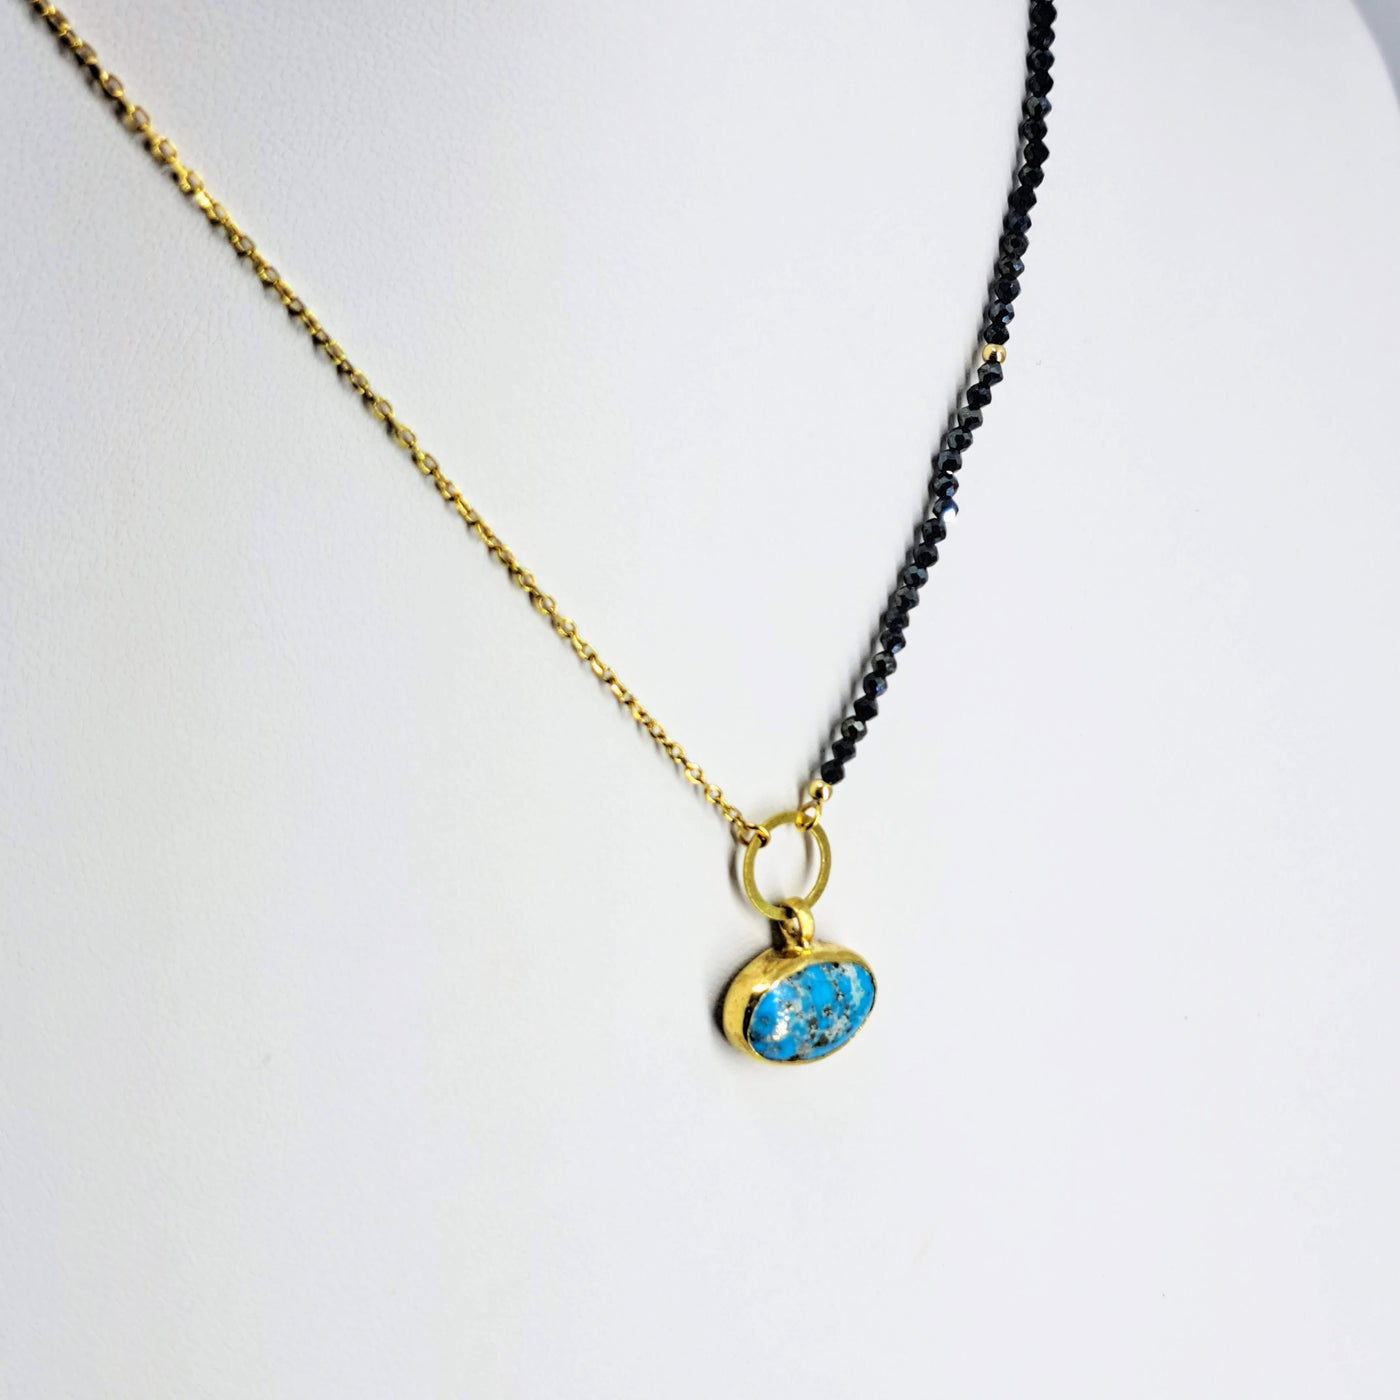 "Sky Light" Pendant Necklace - Turquoise, Black Spinel, Gold Sterling